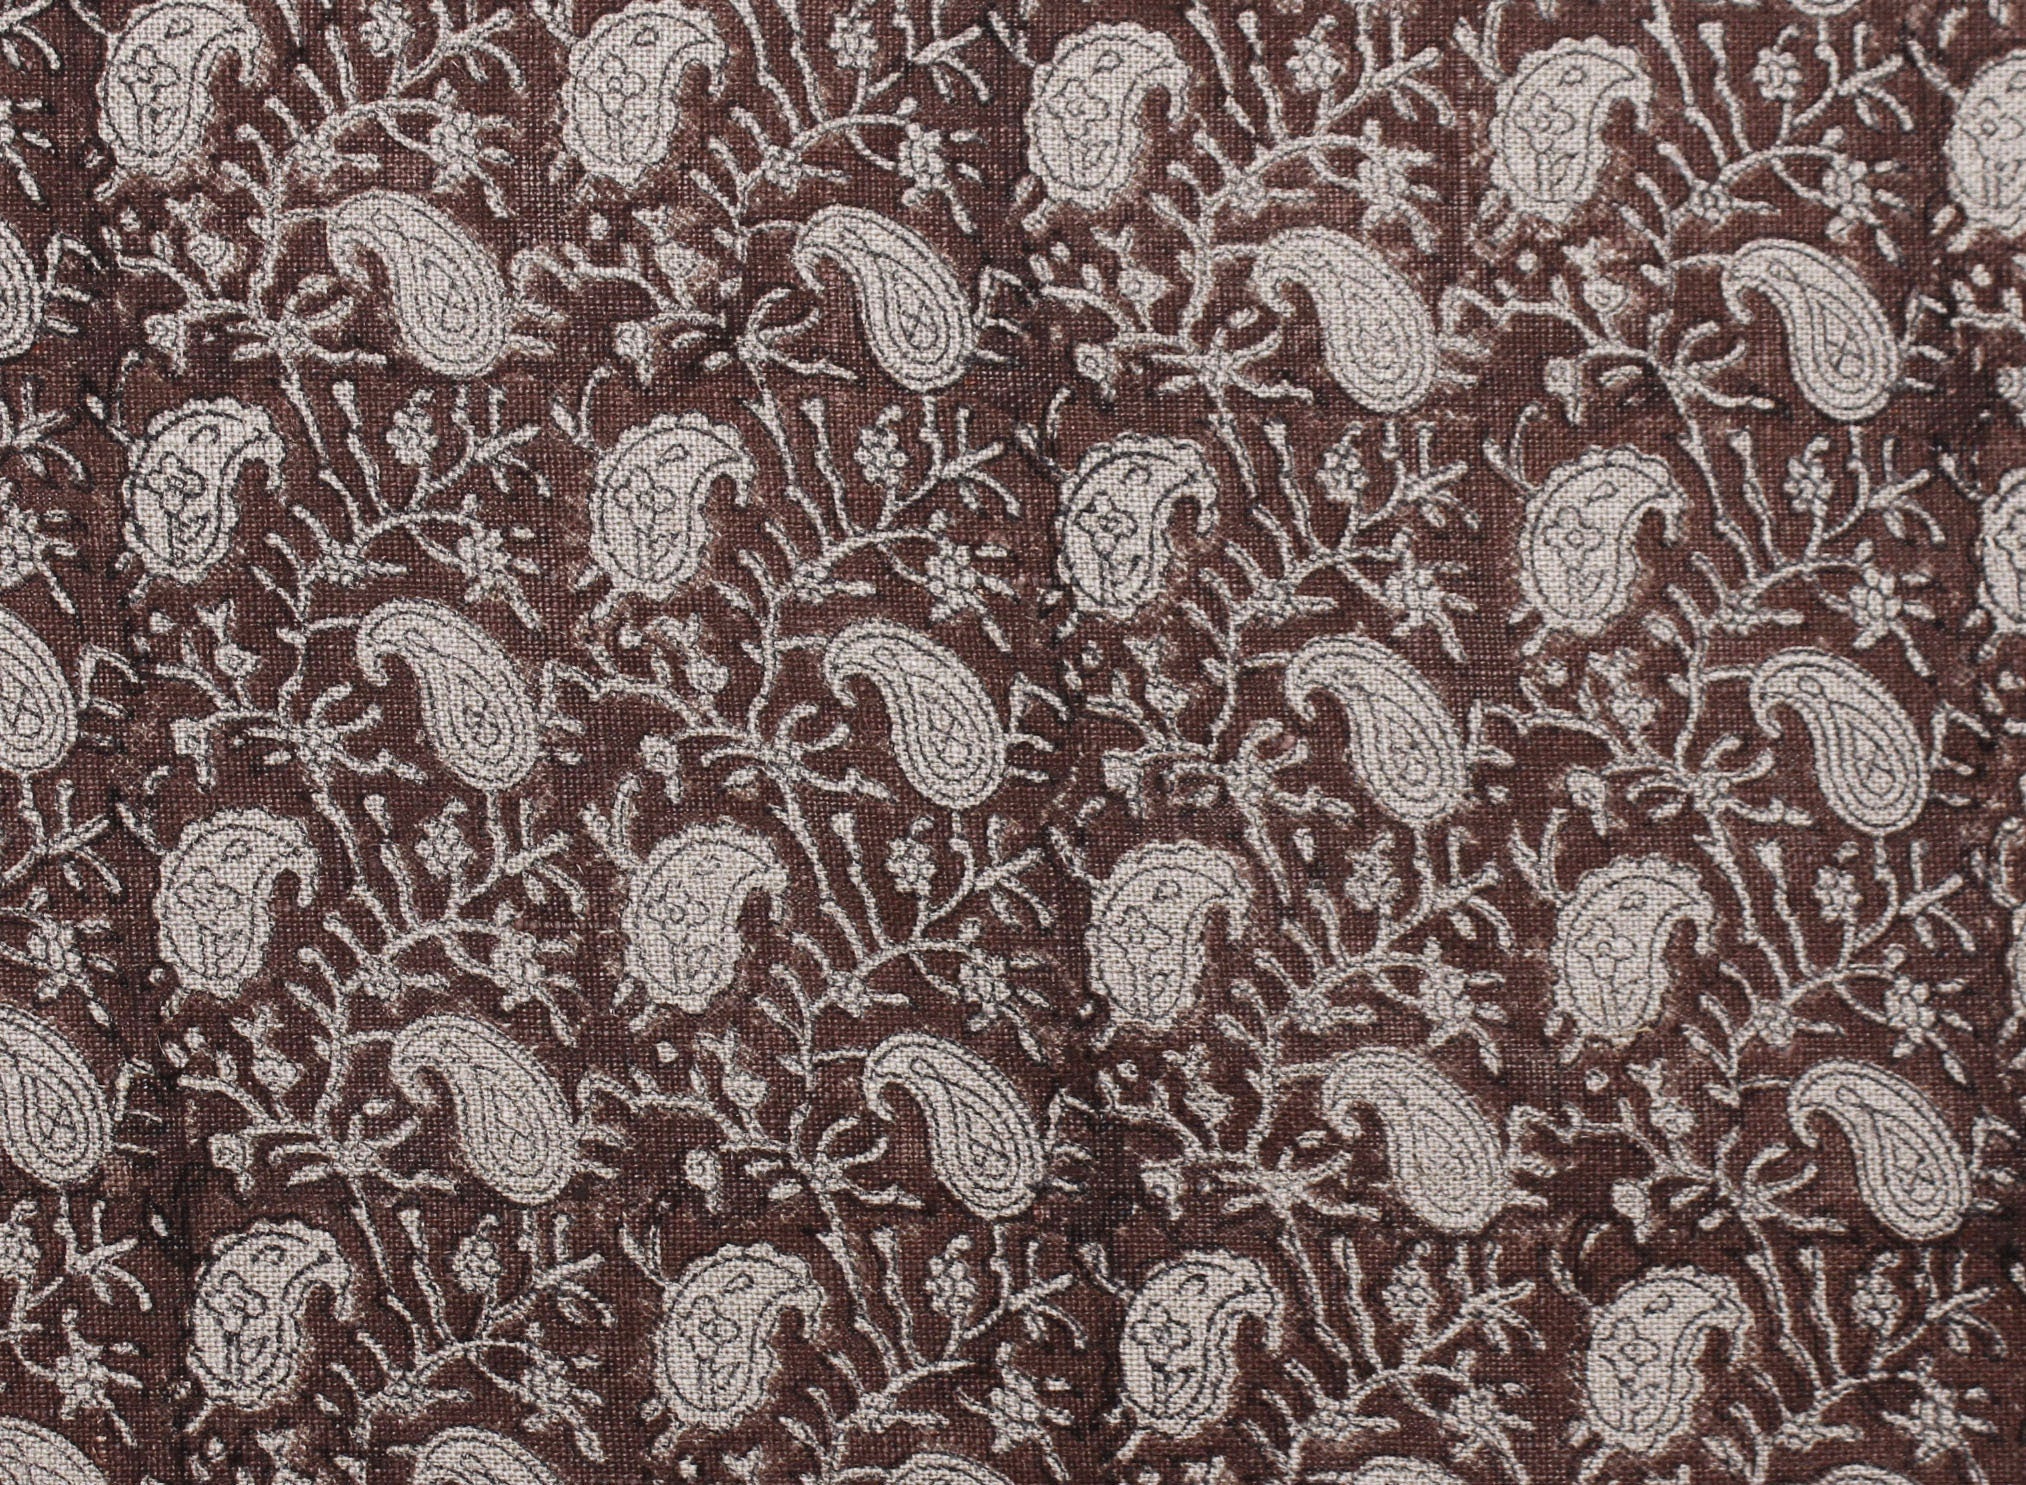 Block Print Linen Fabric, Keri Jaal   Block Print  Handloom Linen,By Yard Linen Fabric, Block Print Fabric, Fabric From India, Homedecors, Upholsteryfurnishing